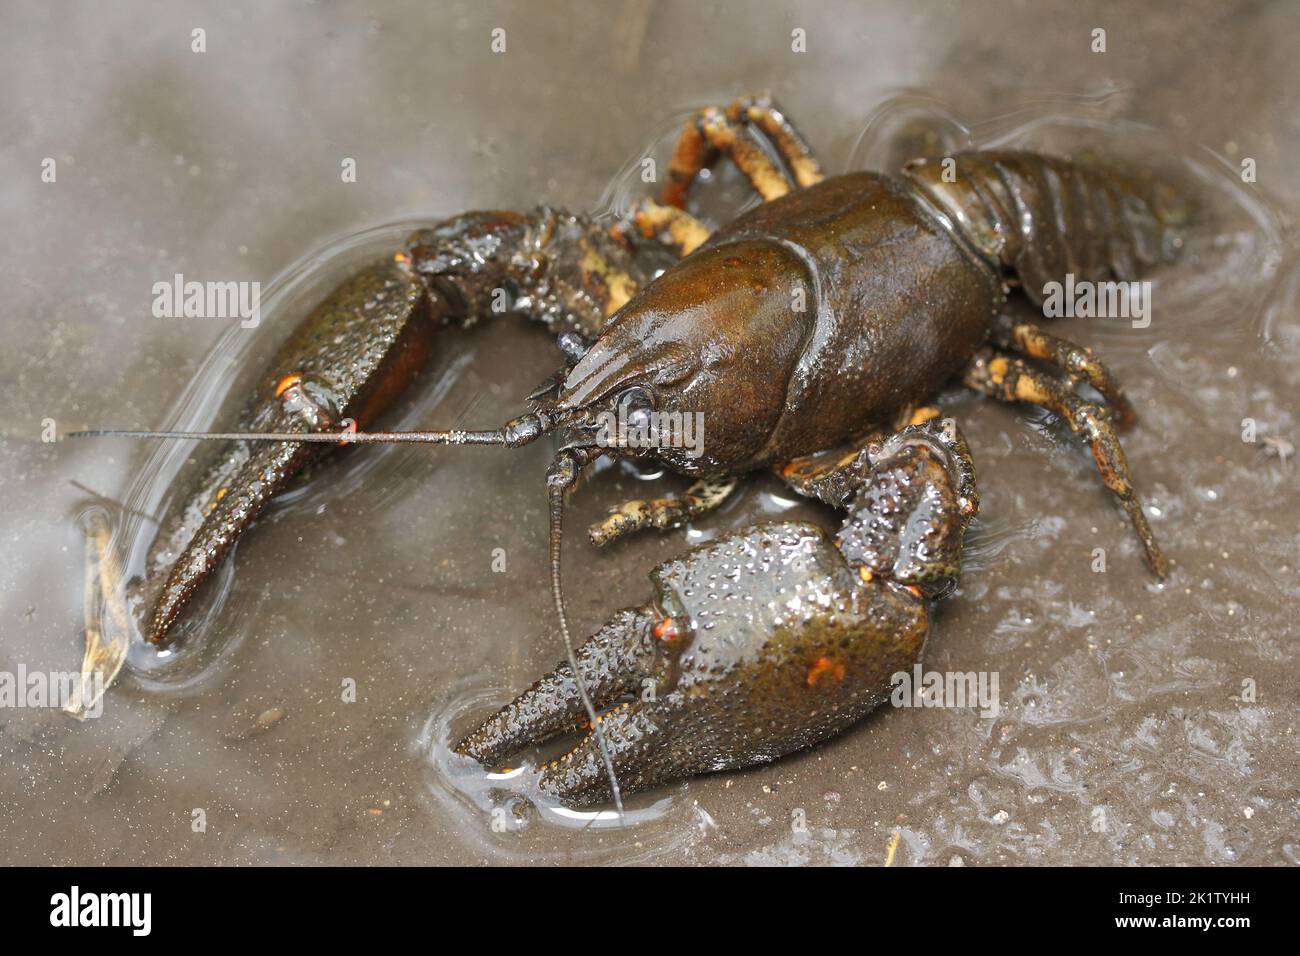 Astacus astacus, the European crayfish, noble crayfish, or broad-fingered crayfish in natural habitat Stock Photo